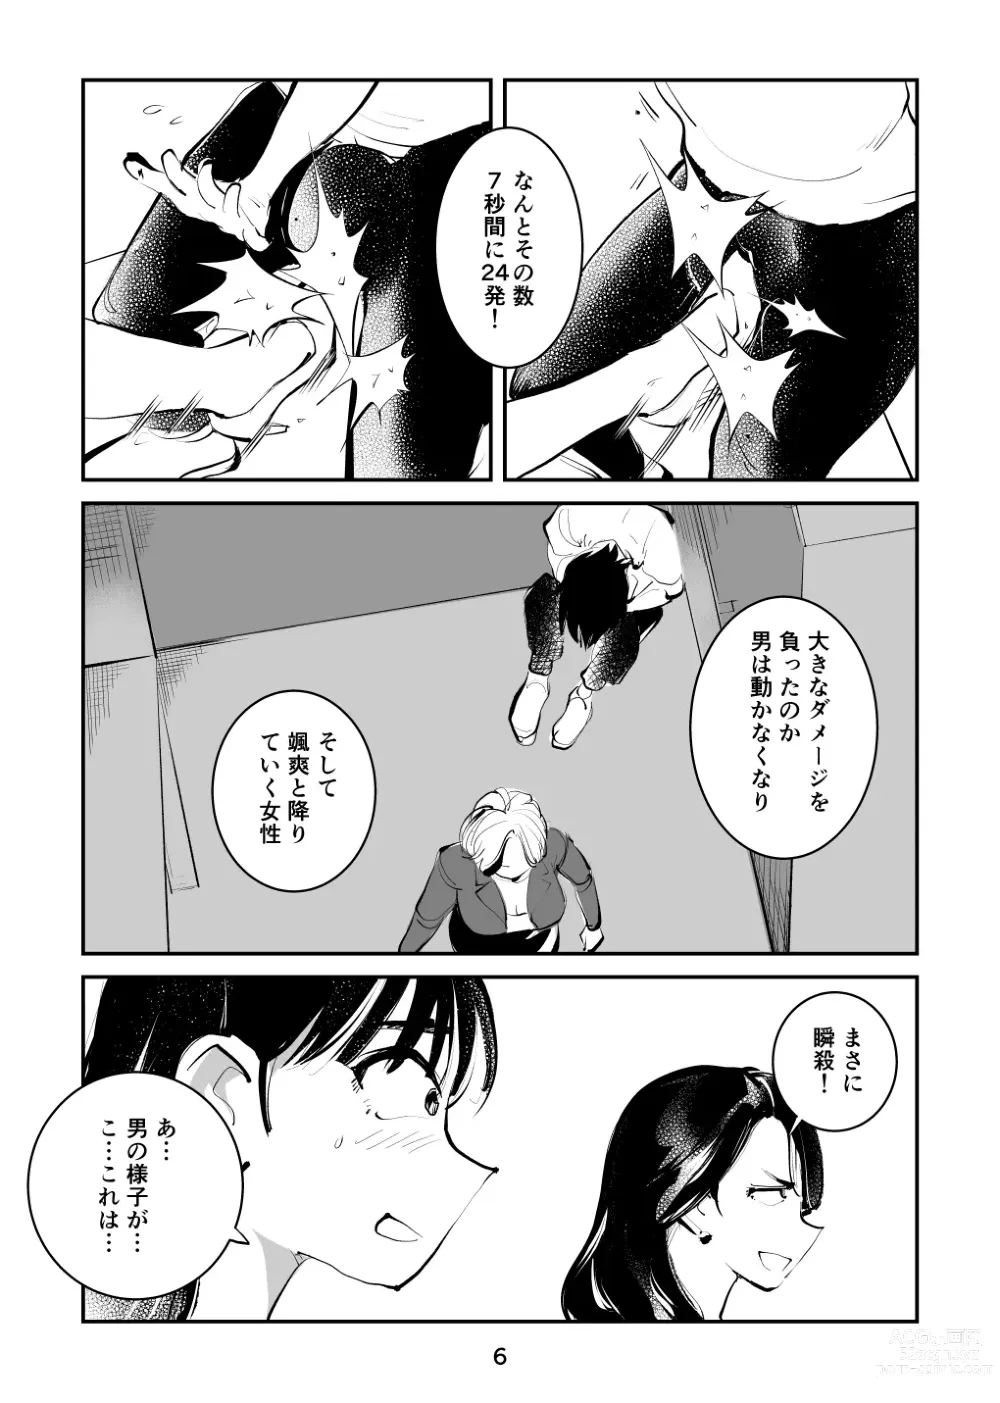 Page 6 of doujinshi Kinkeri onna keiji ryōko